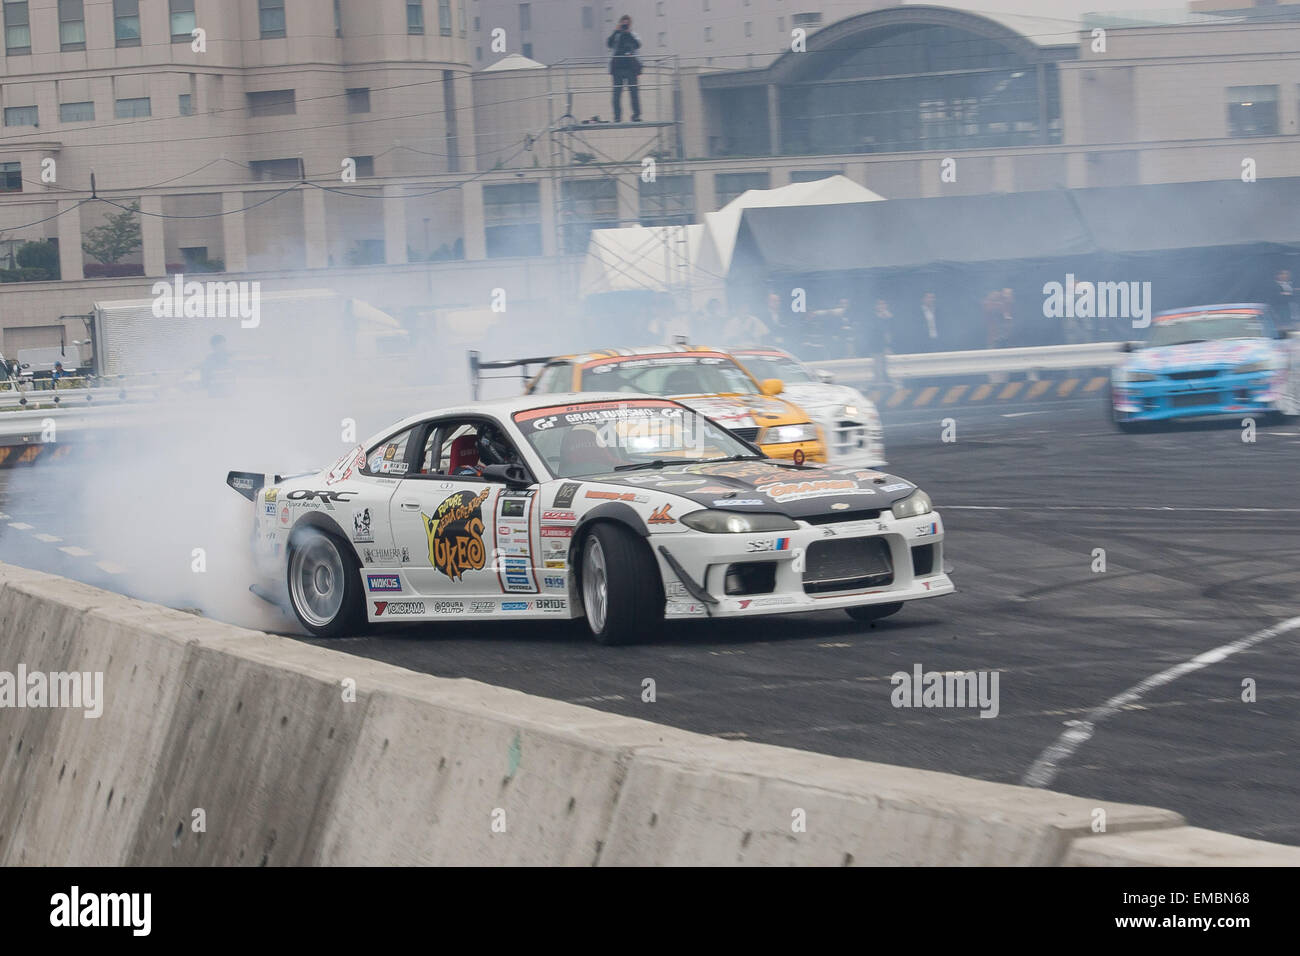 tokyo drift car Stock Photo - Alamy